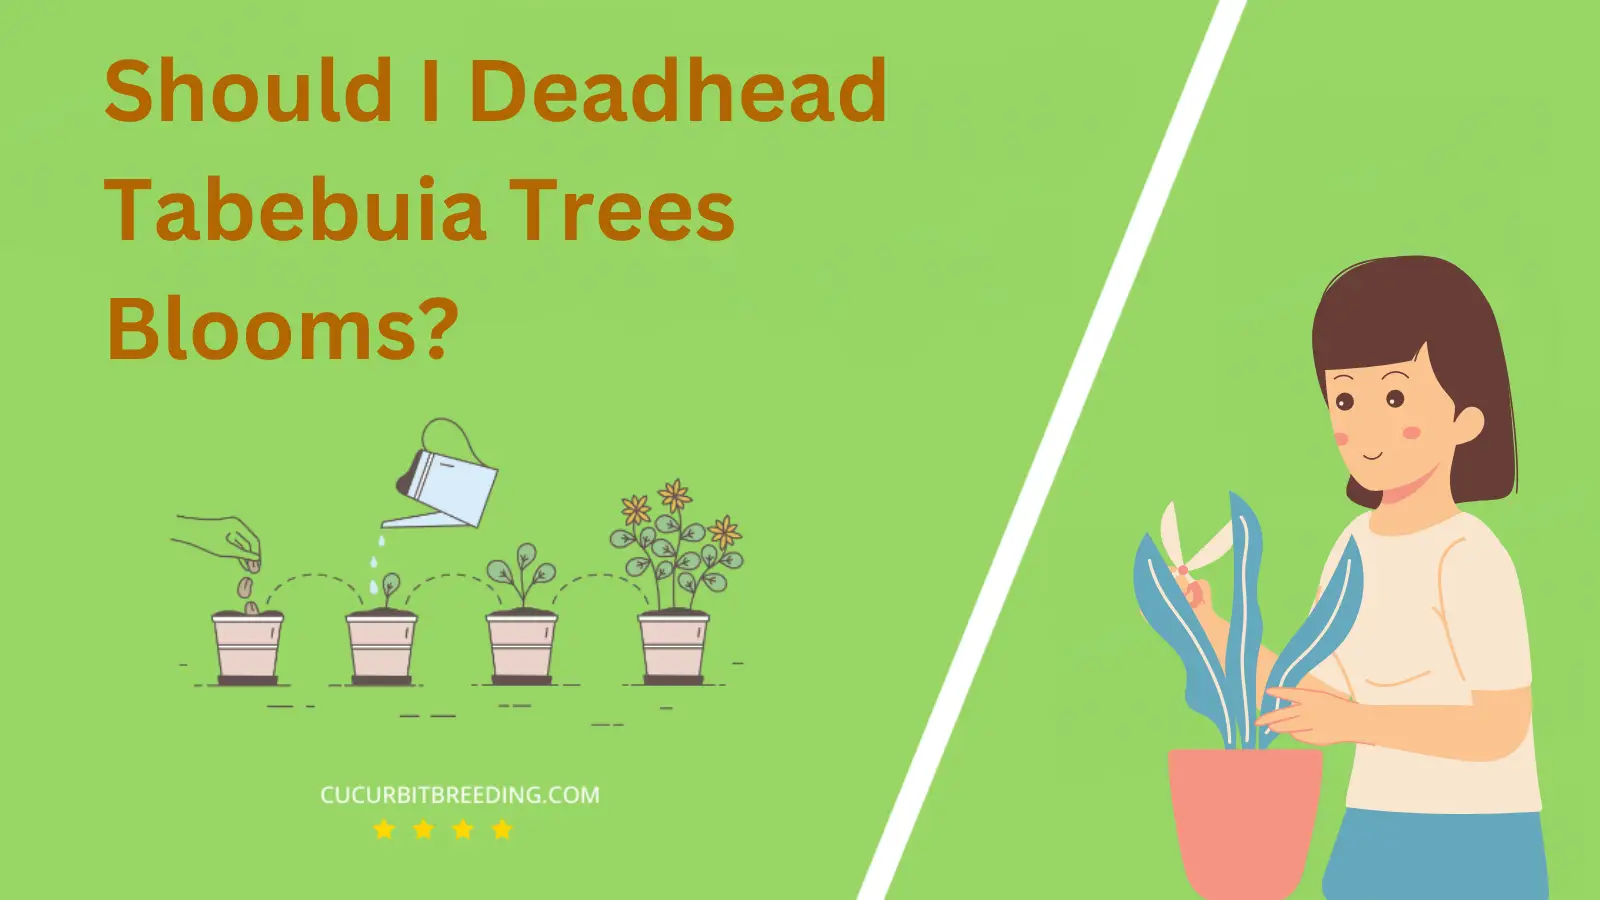 Should I Deadhead Tabebuia Trees Blooms?